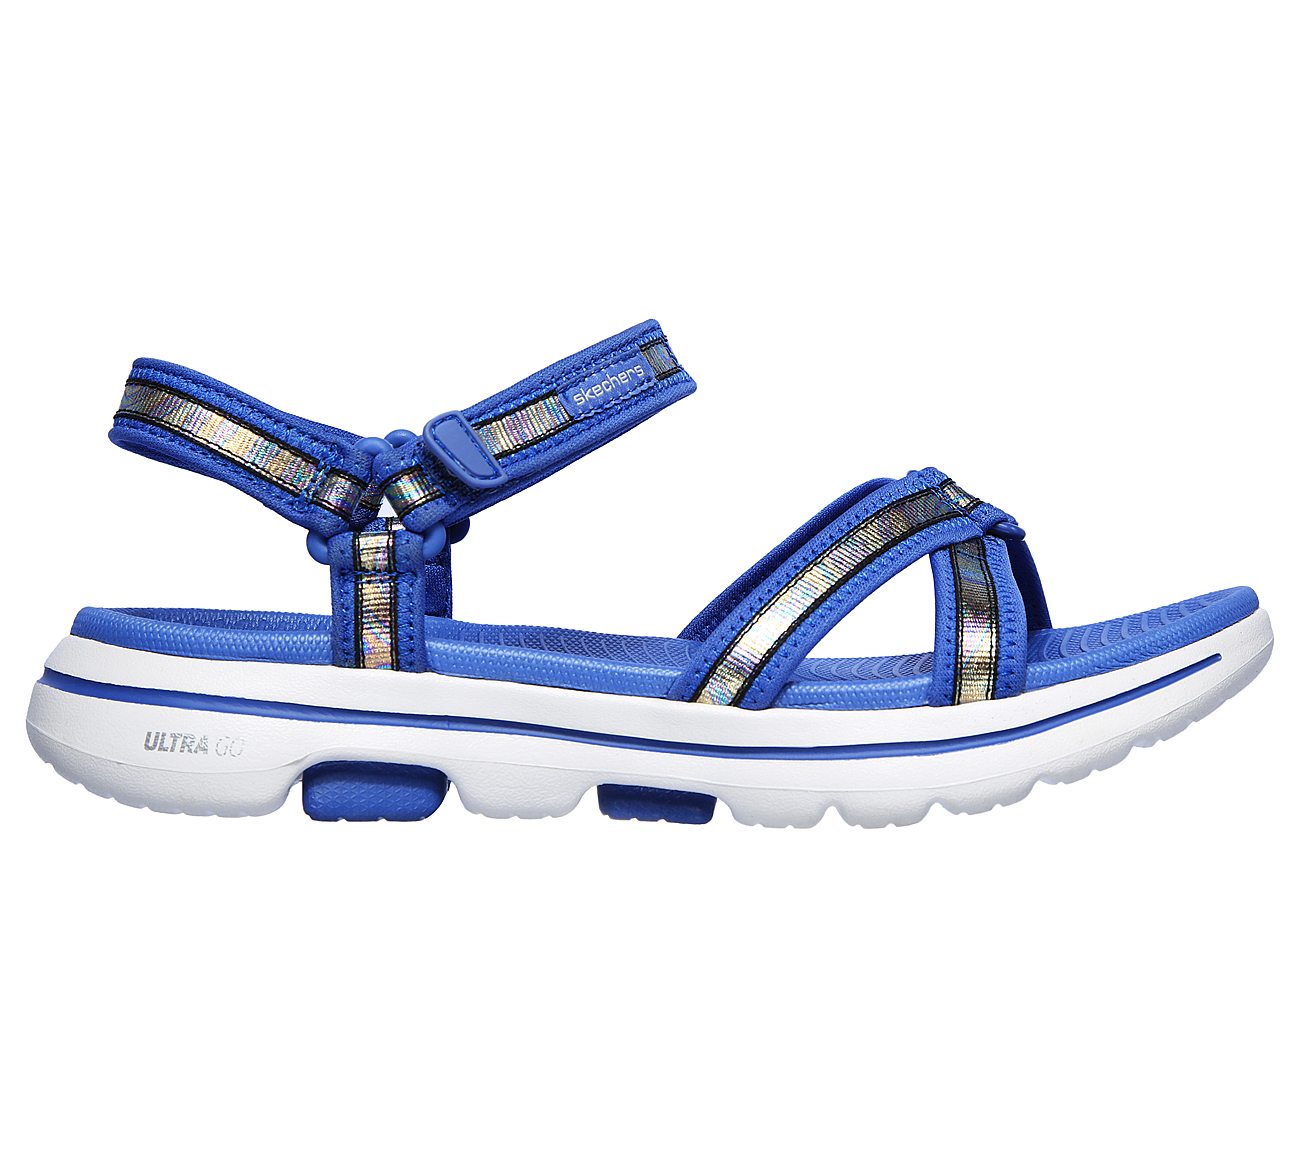 Skechers O-T-G Womens Sandals GO WALK 5 CELESTIAL Sandalen Women Blau